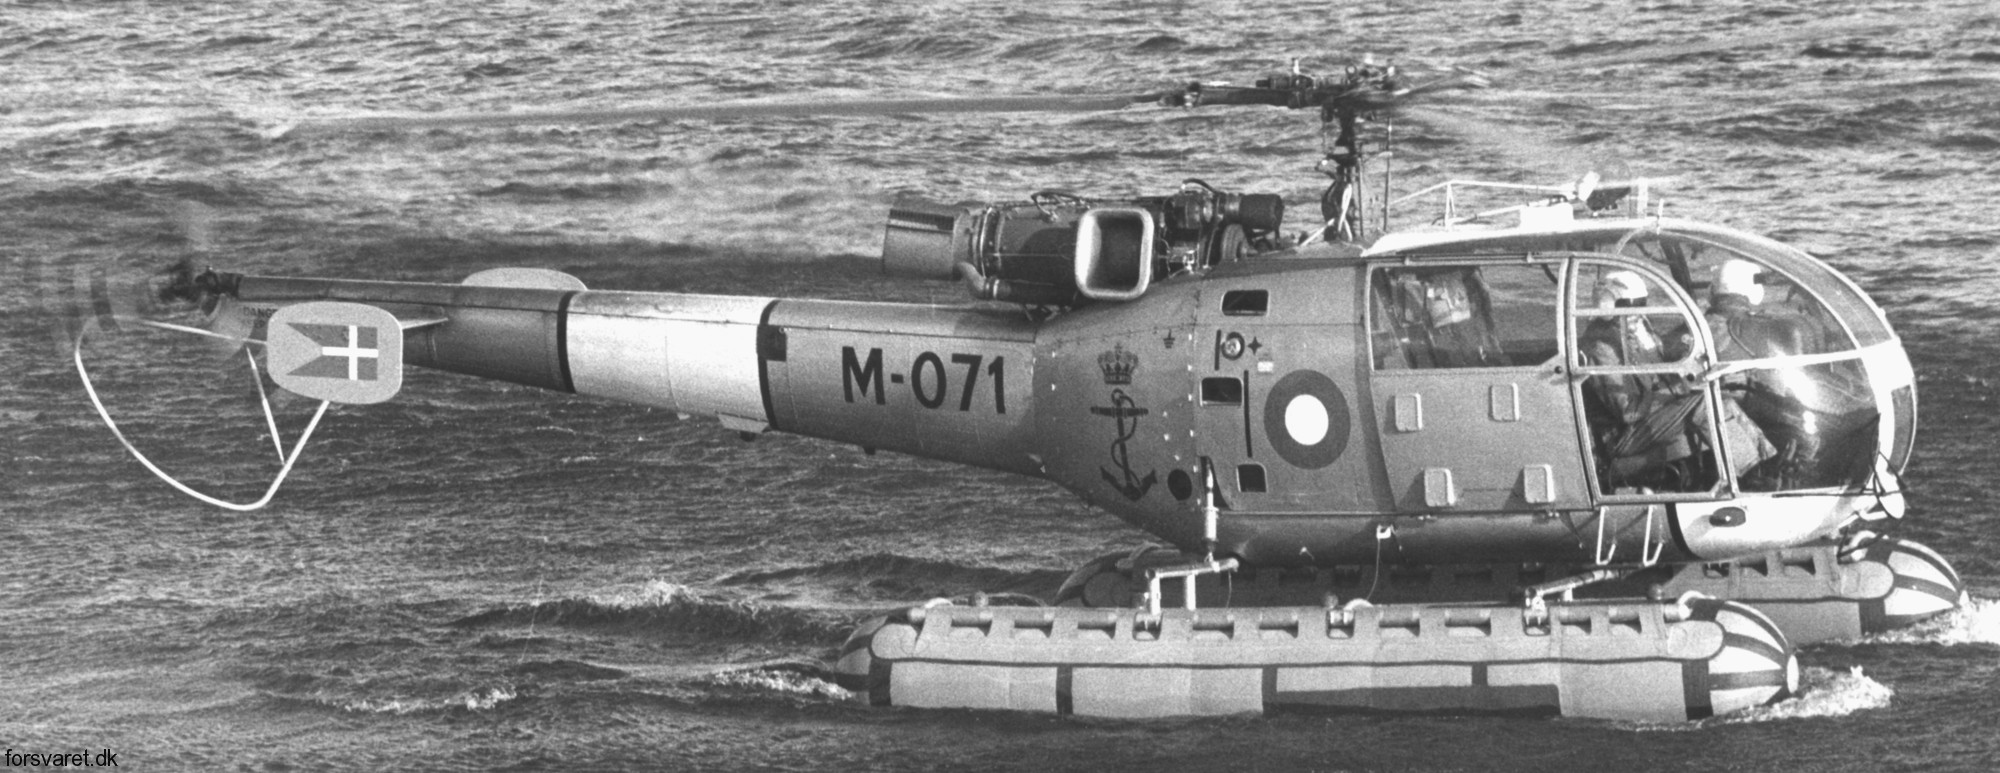 sa 316b alouette iii helicopter royal danish navy søværnet kongelige danske marine sud aviation m-071 21